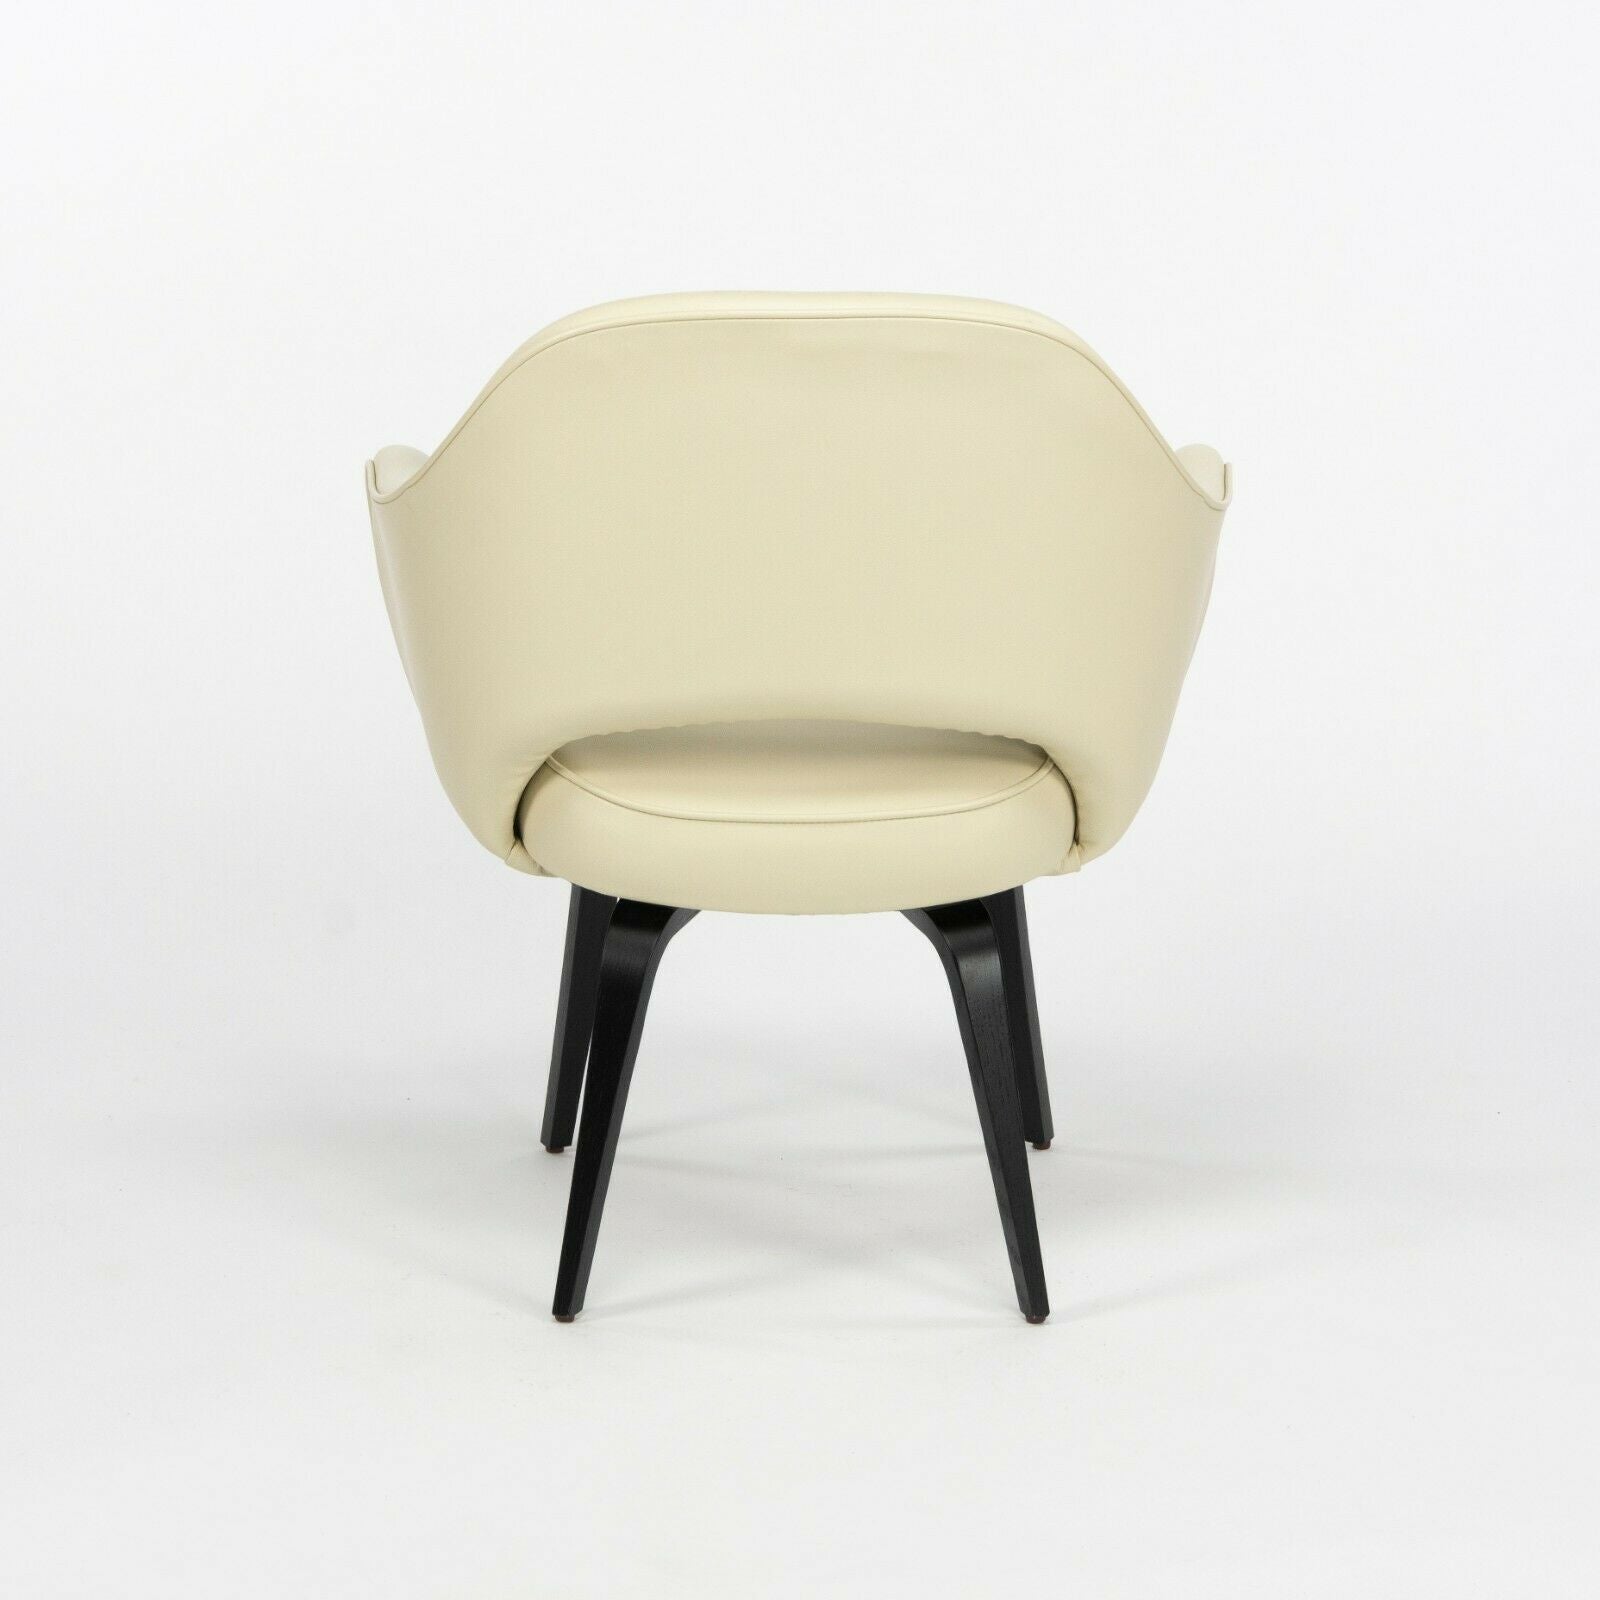 Eero Saarinen for Knoll 2020 Executive Armchair with Ivory Leather & Wood Legs